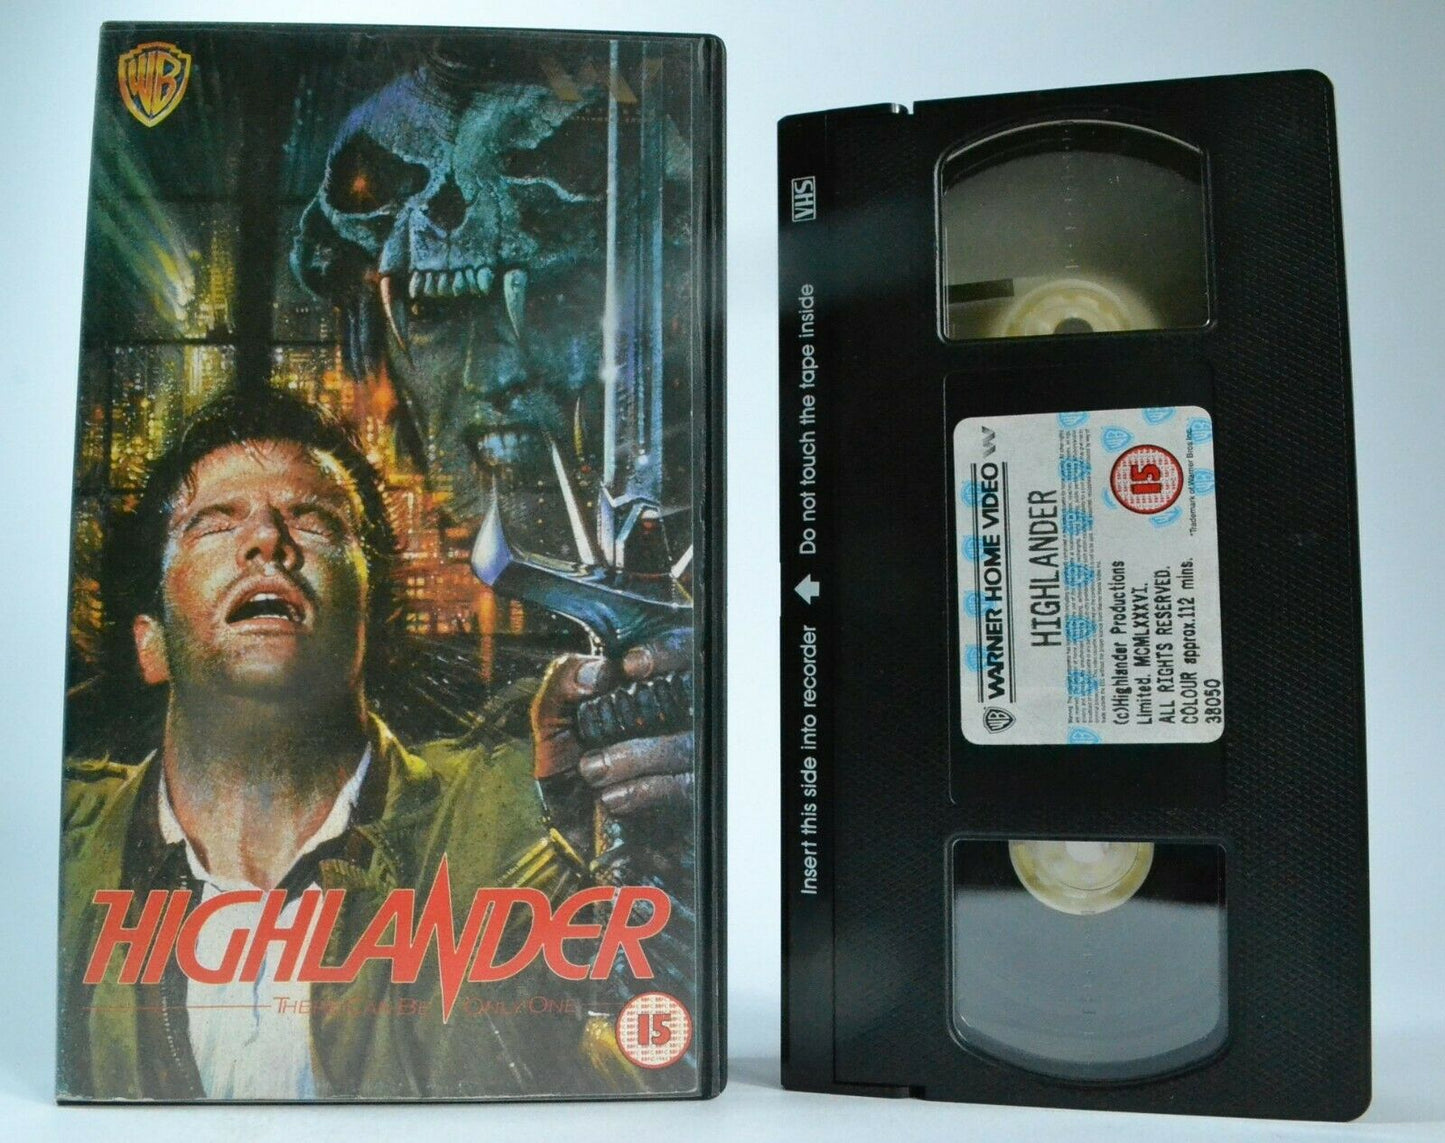 Highlander (1986): Action Fantasy - Christopher Lambert / Sean Connery - Pal VHS-